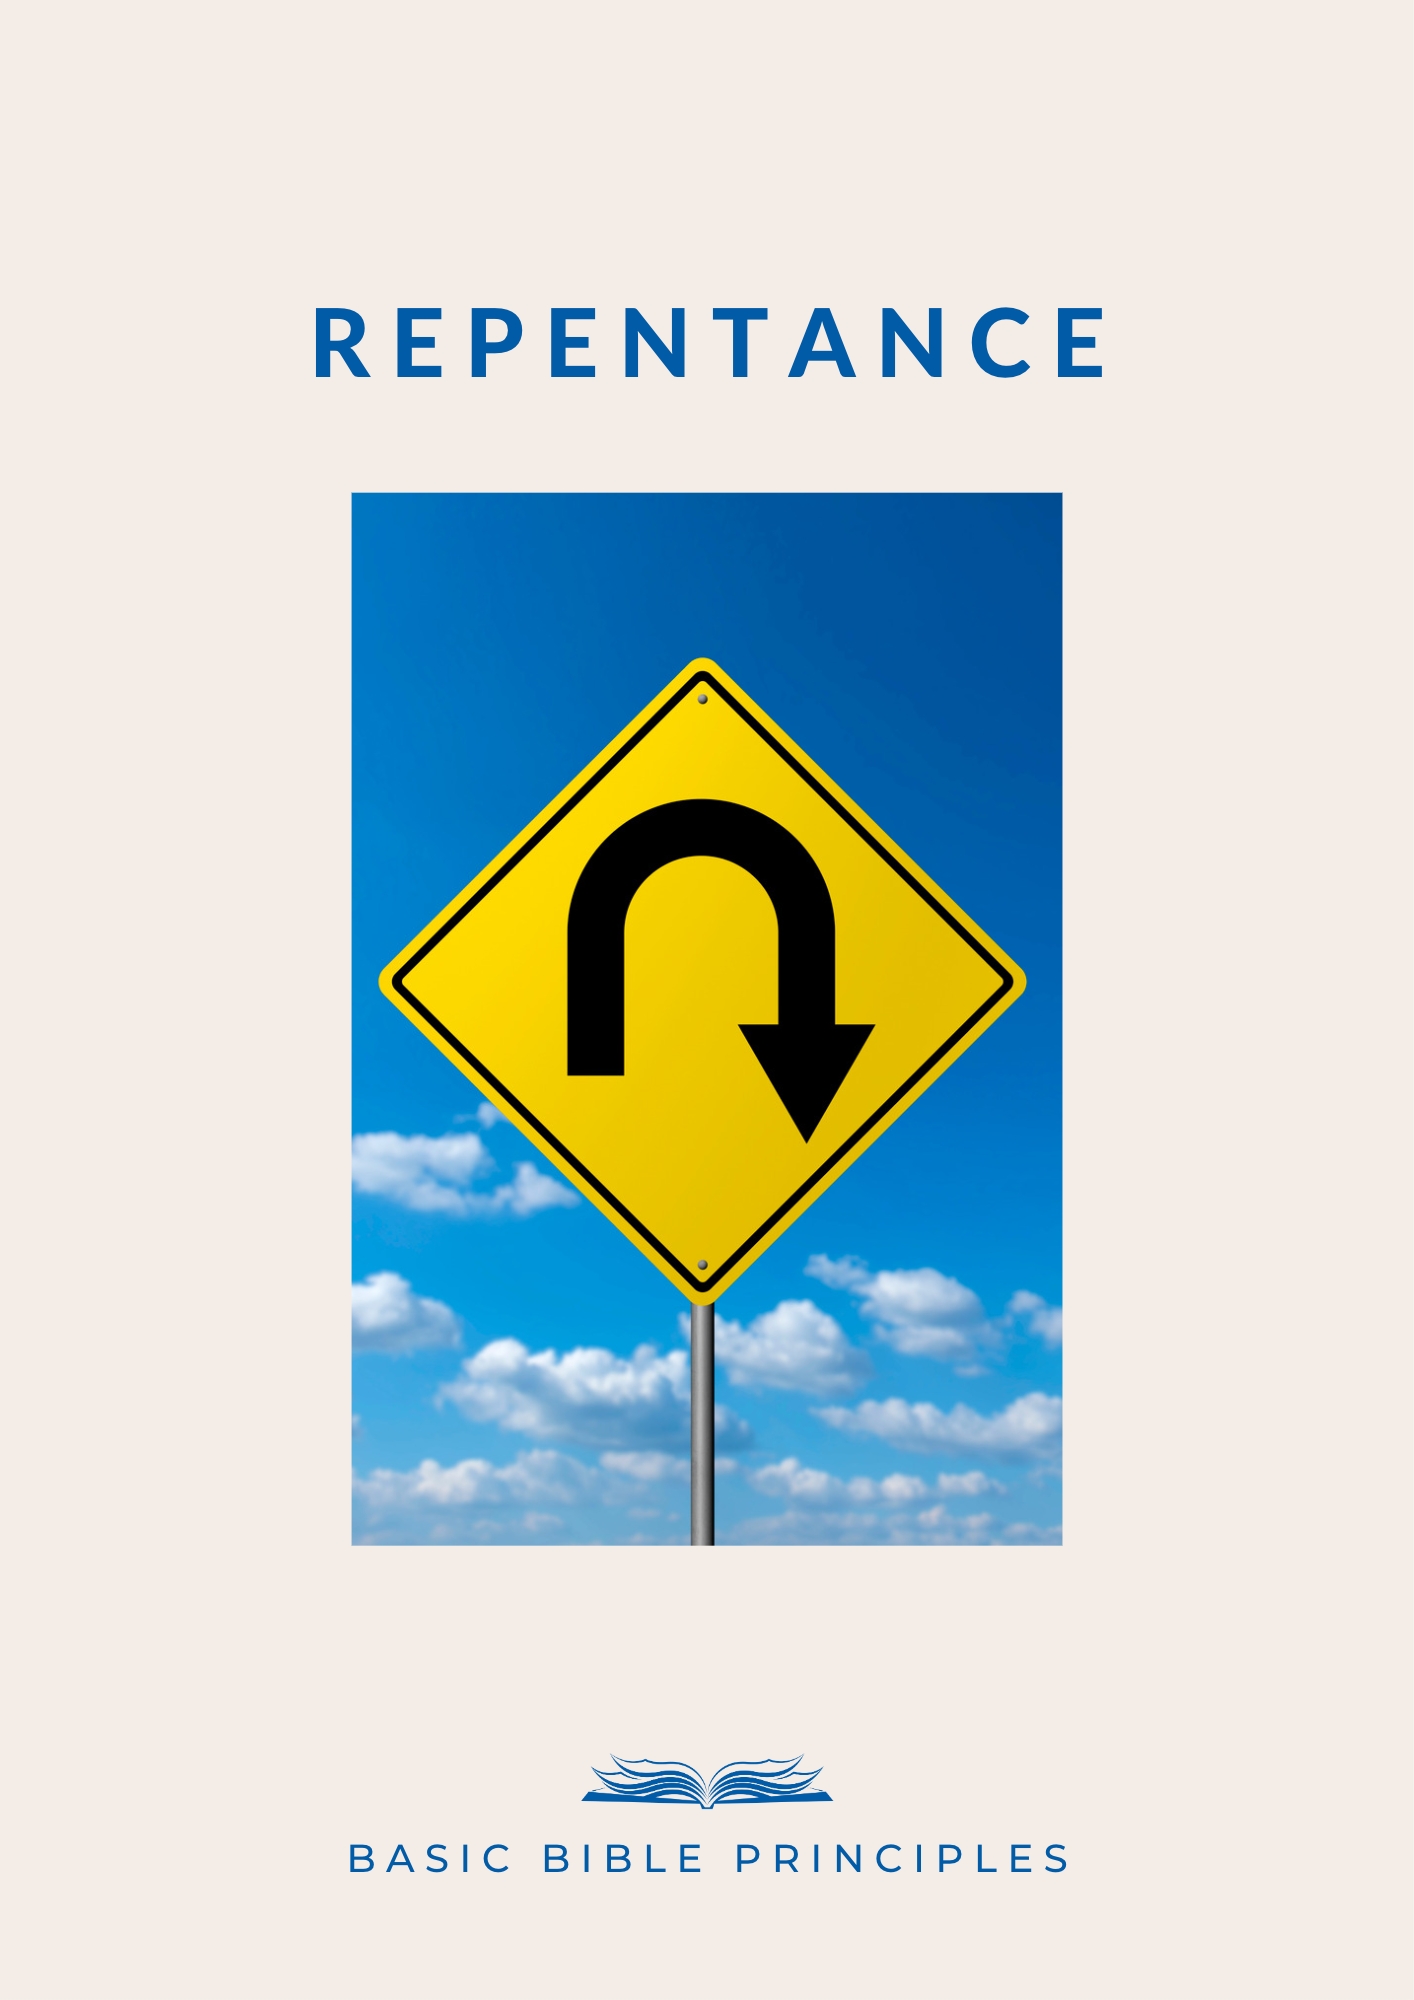 Basic Bible Principles: REPENTANCE